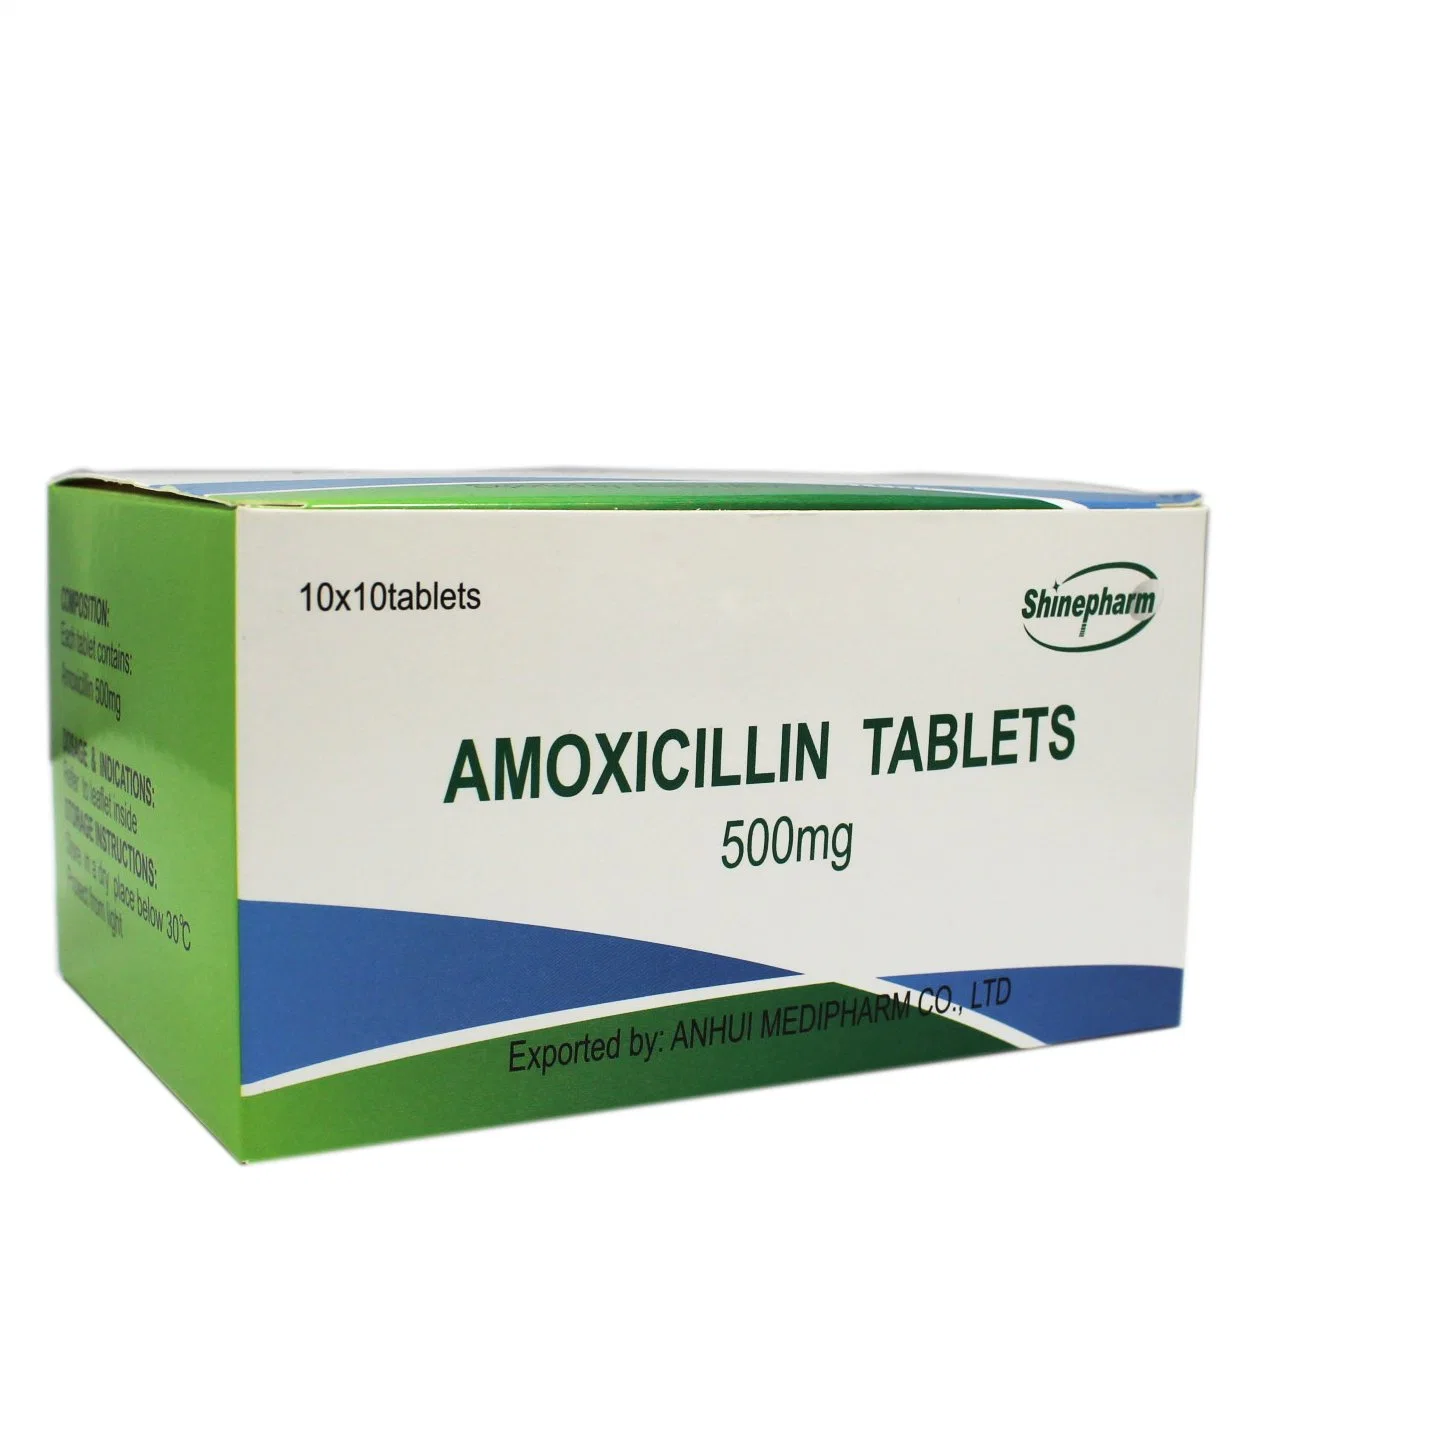 L'amoxicilline Tablet 500mg fini de la médecine occidentale BPF